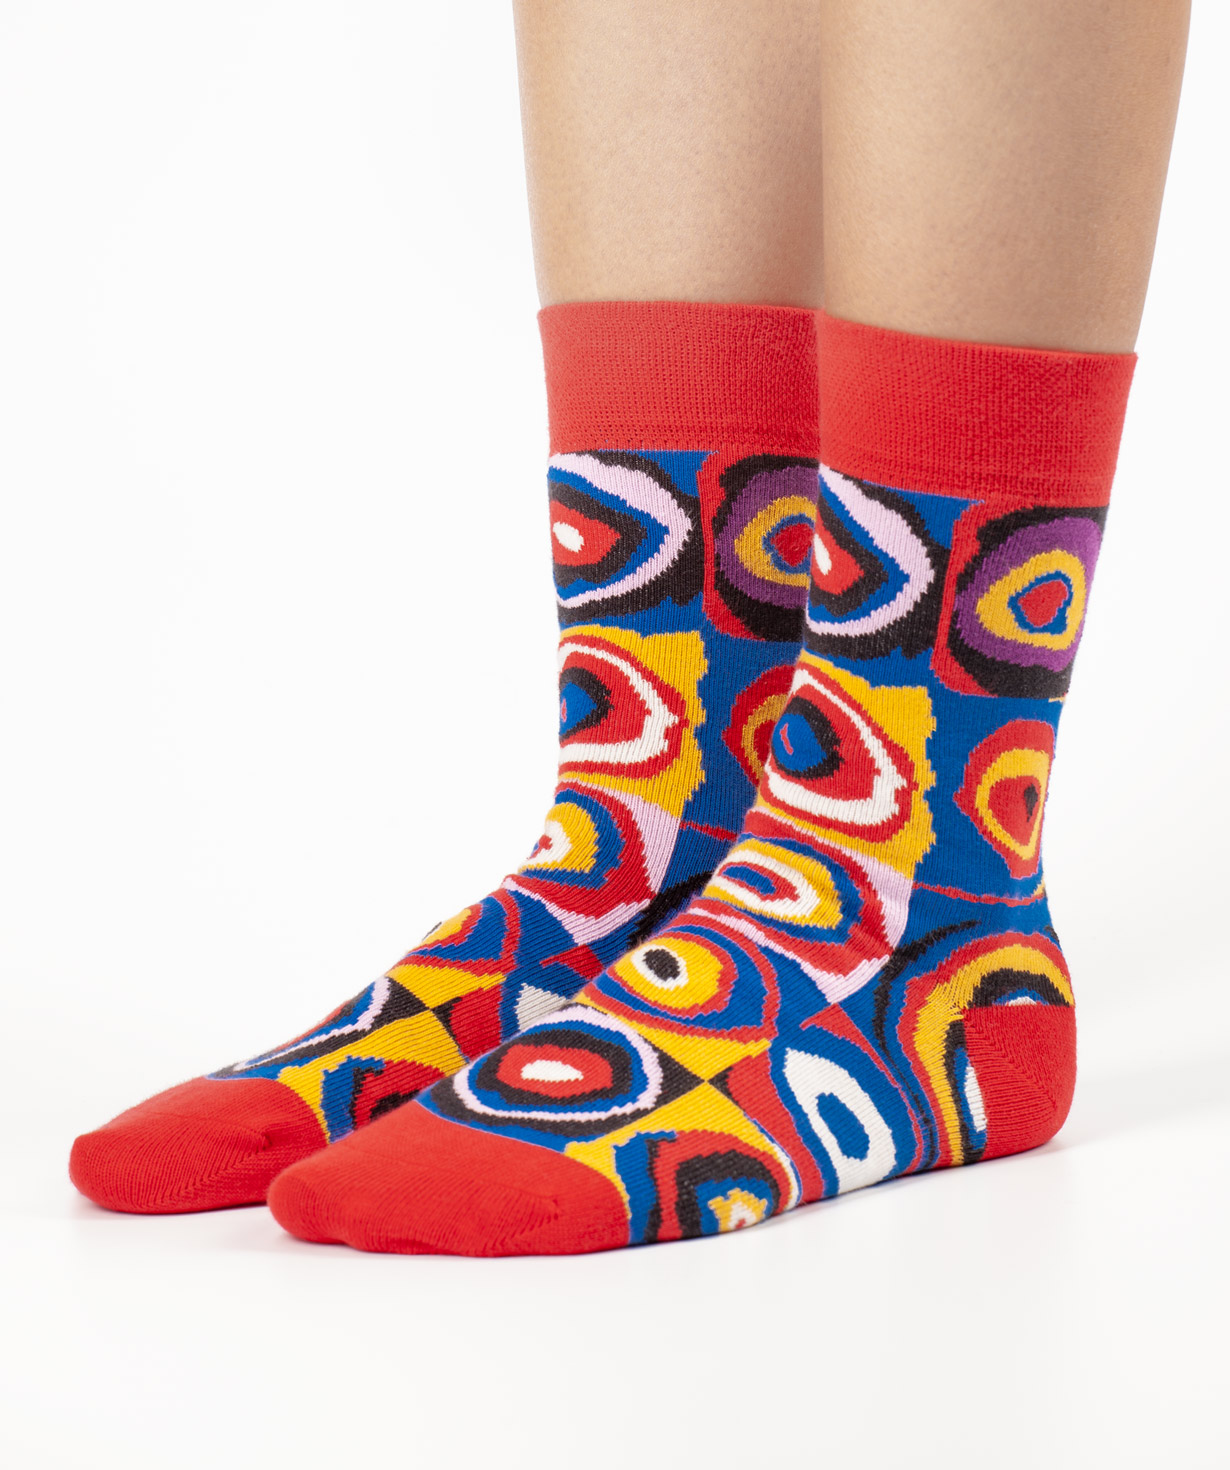 Socks  `Art socks` with `Farbstudie Quadrate` painting